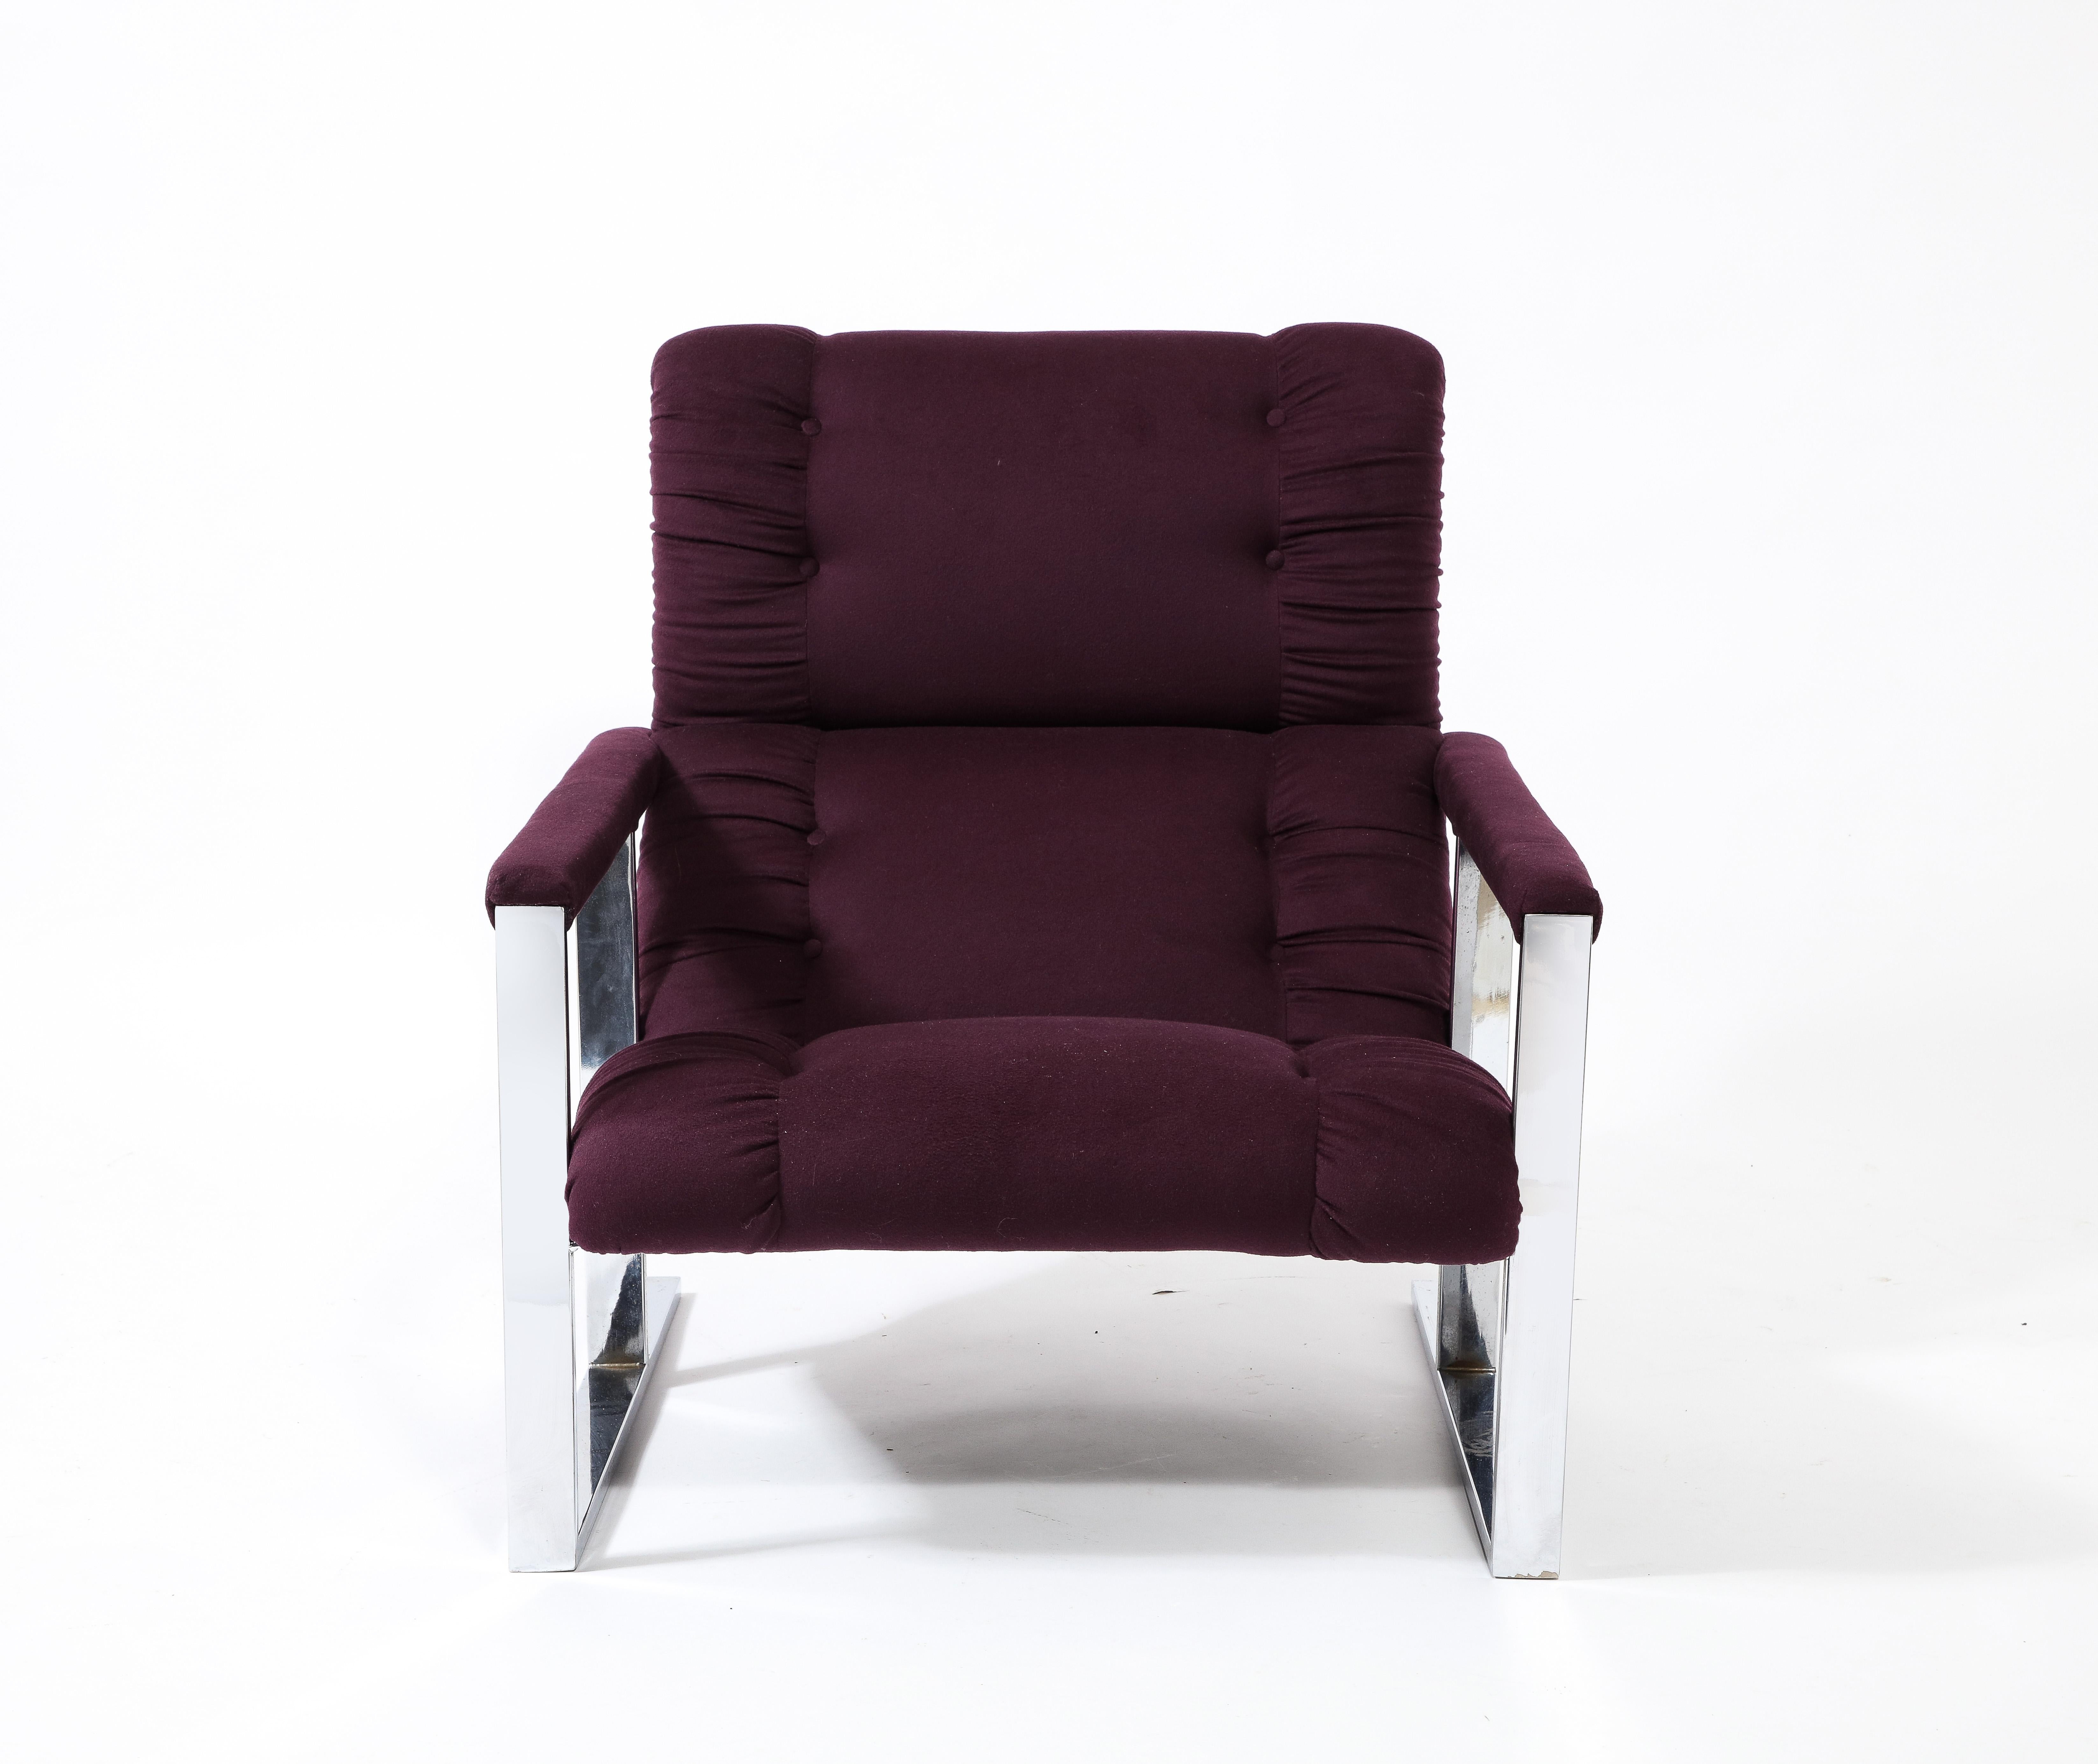 Modernist Angular Chrome Lounge Chair & Ottoman in Aubergine Wool, USA 1970's For Sale 2